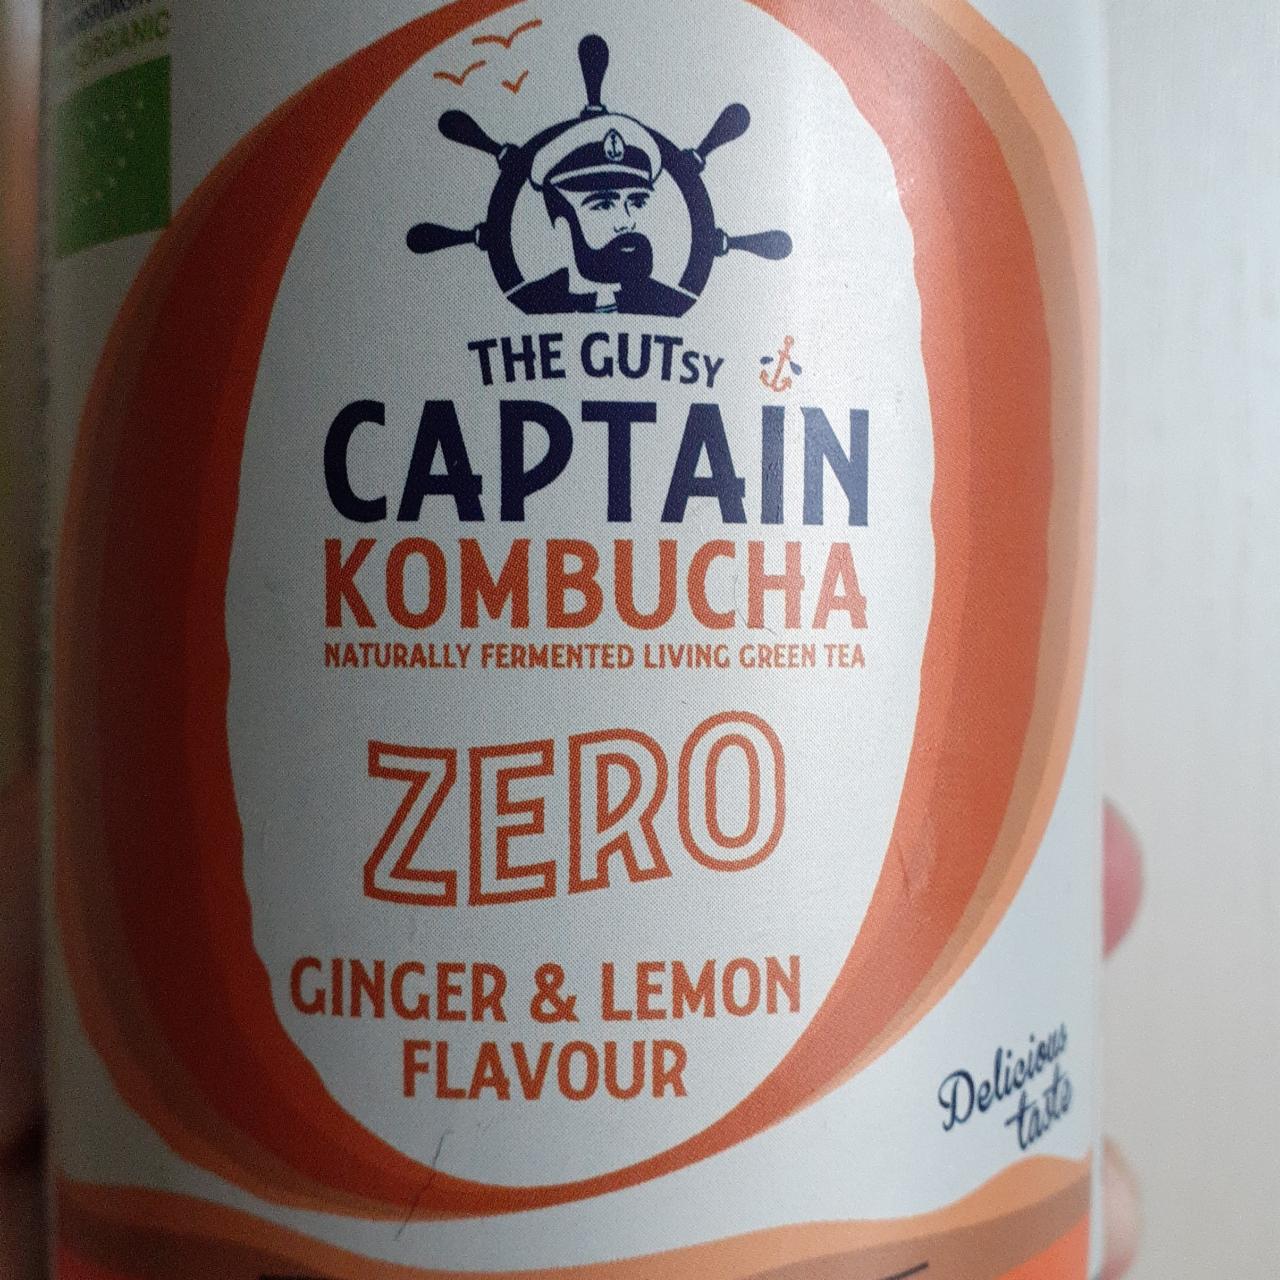 Fotografie - Captain kombucha zero Ginger & Lemon flavour The Gutsy